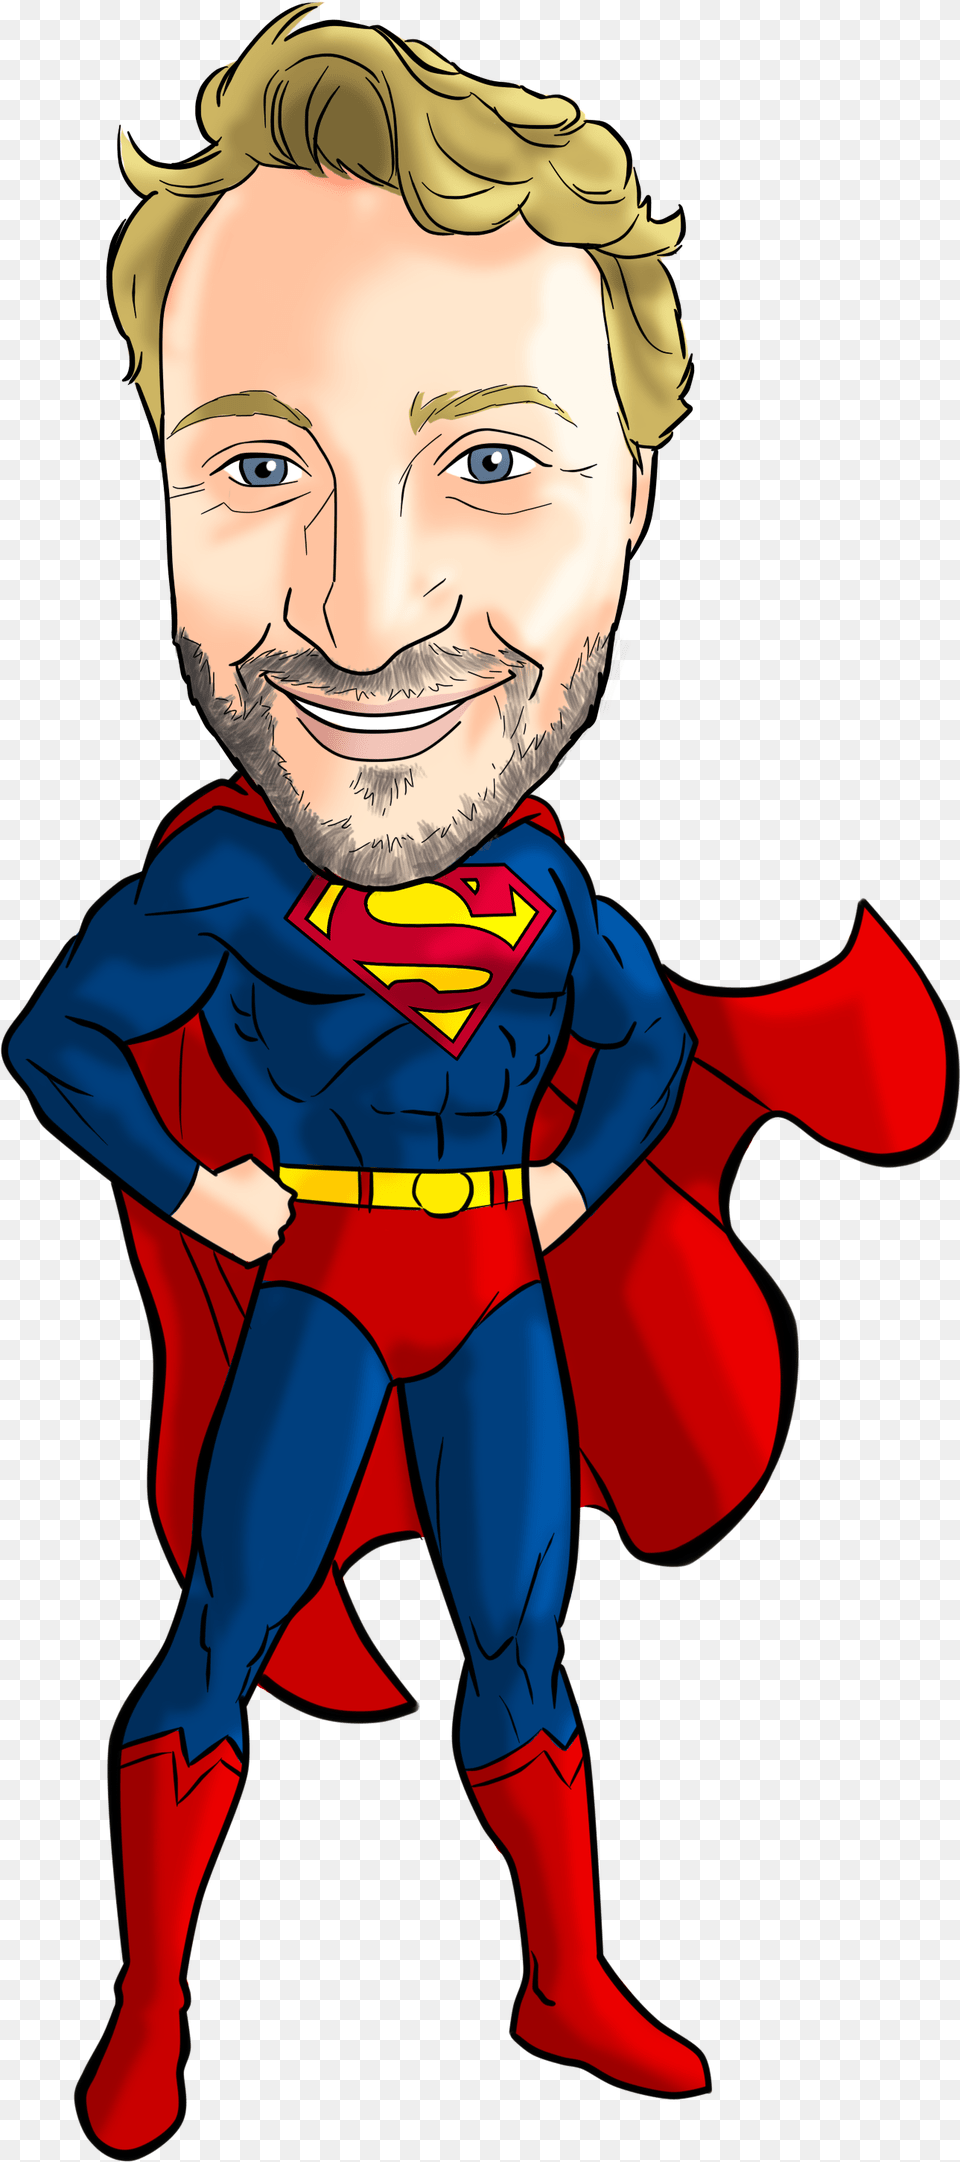 Superman Superhero Caricature Cartoon Youtube Superman, Book, Cape, Clothing, Comics Png